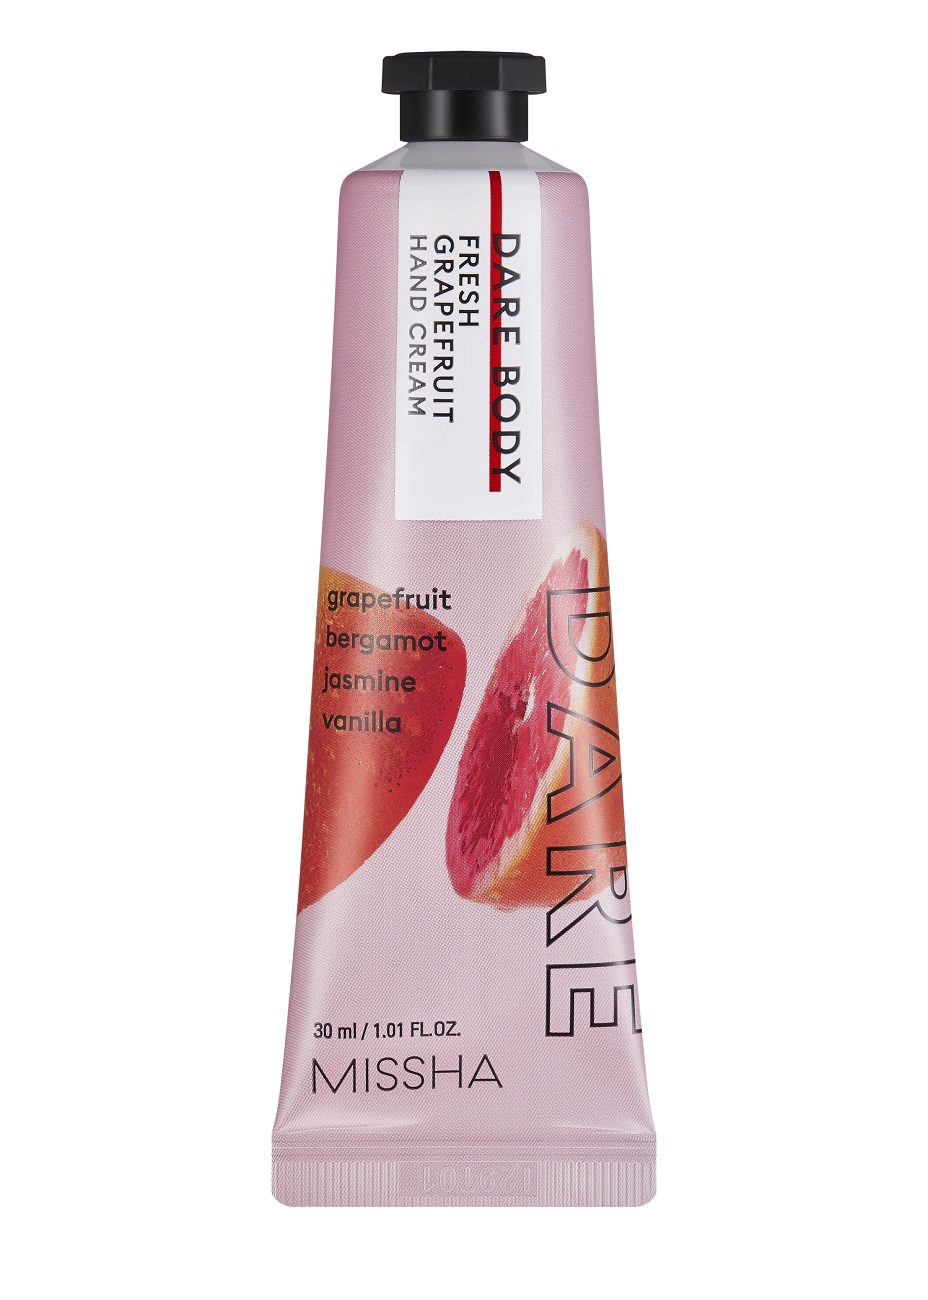 Missha Крем для рук Fresh grapefruit, 30 мл (Missha, Dare Body Hand Cream)